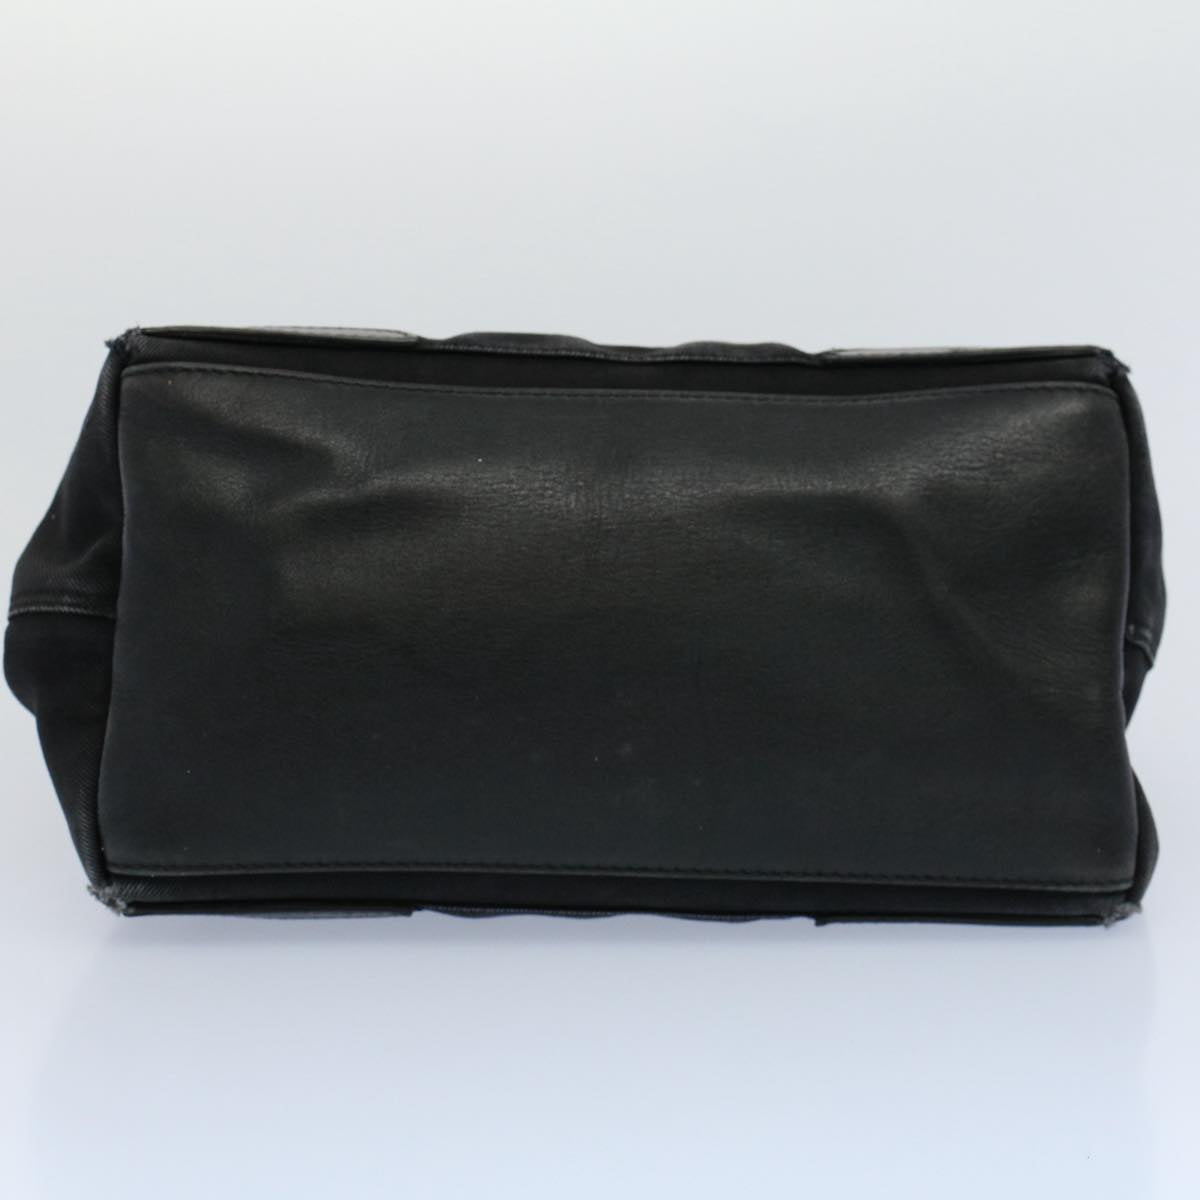 BALENCIAGA Tote Bag Canvas Black 339933 Auth bs8849